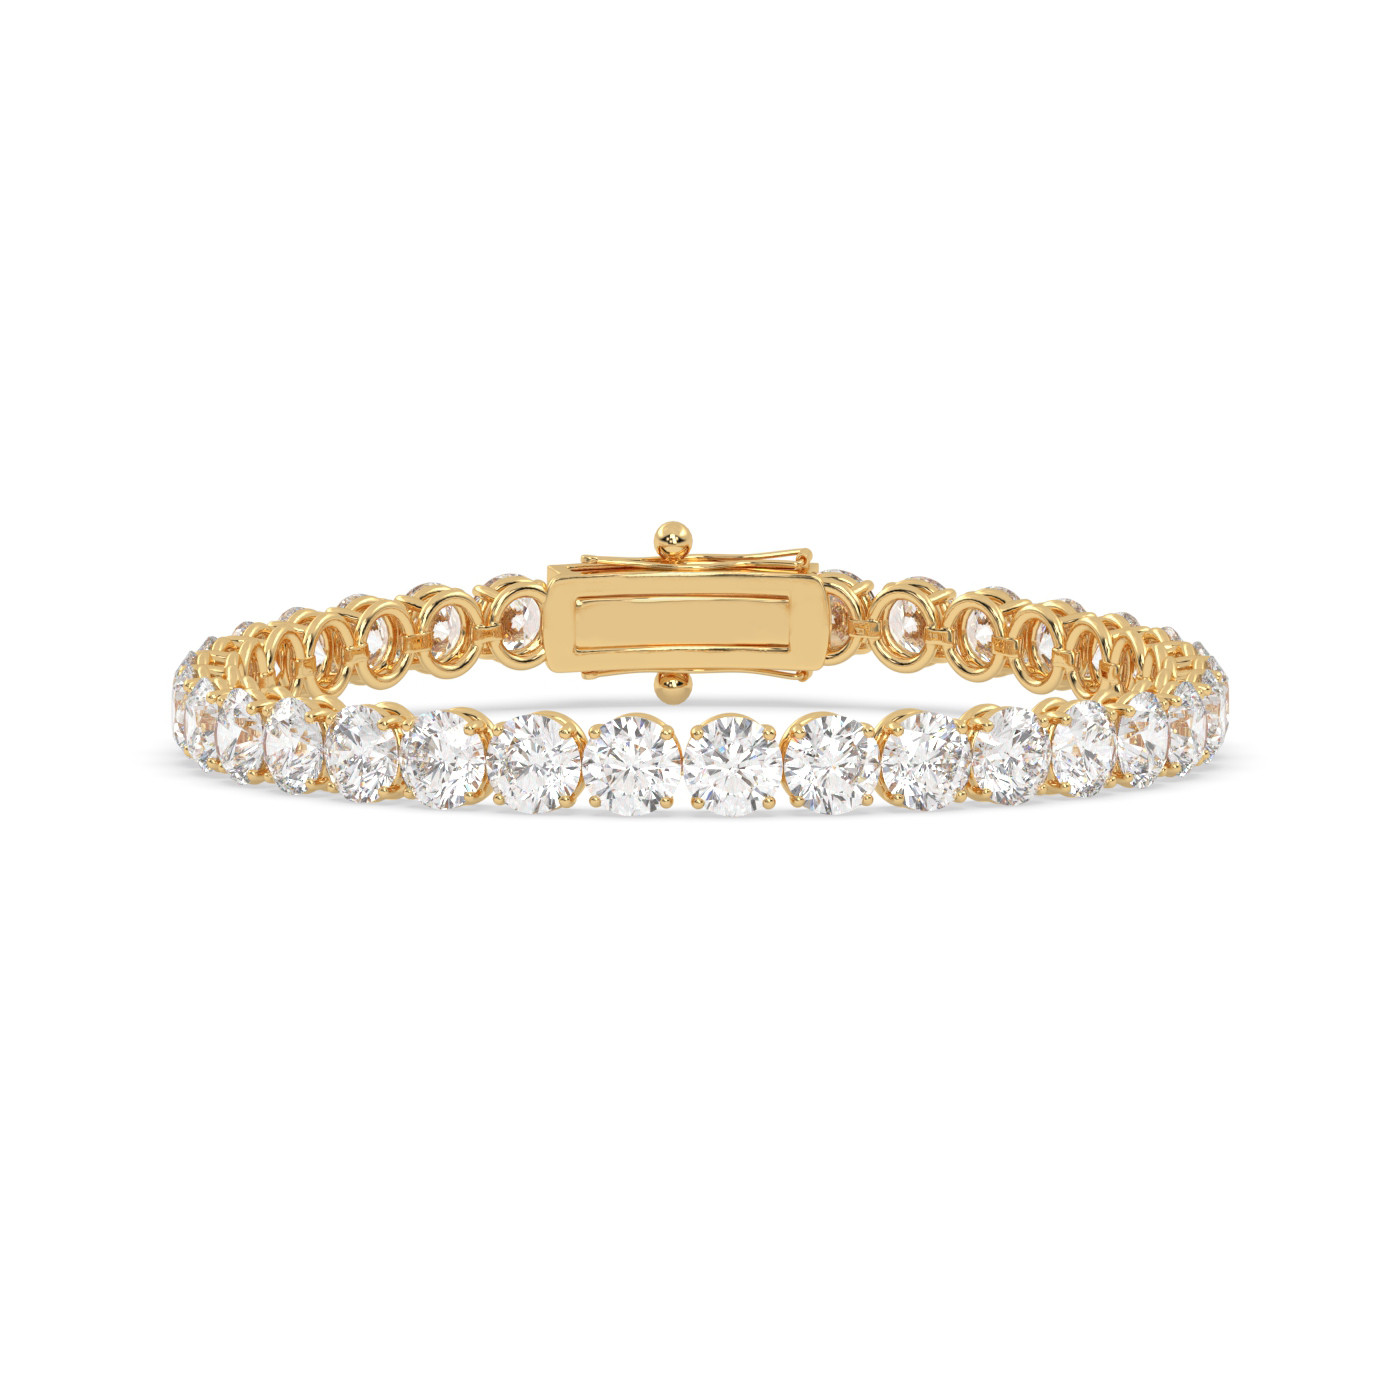 18k rose gold 17 carat round diamond tennis bracelet with traditional lock sytem Photos & images